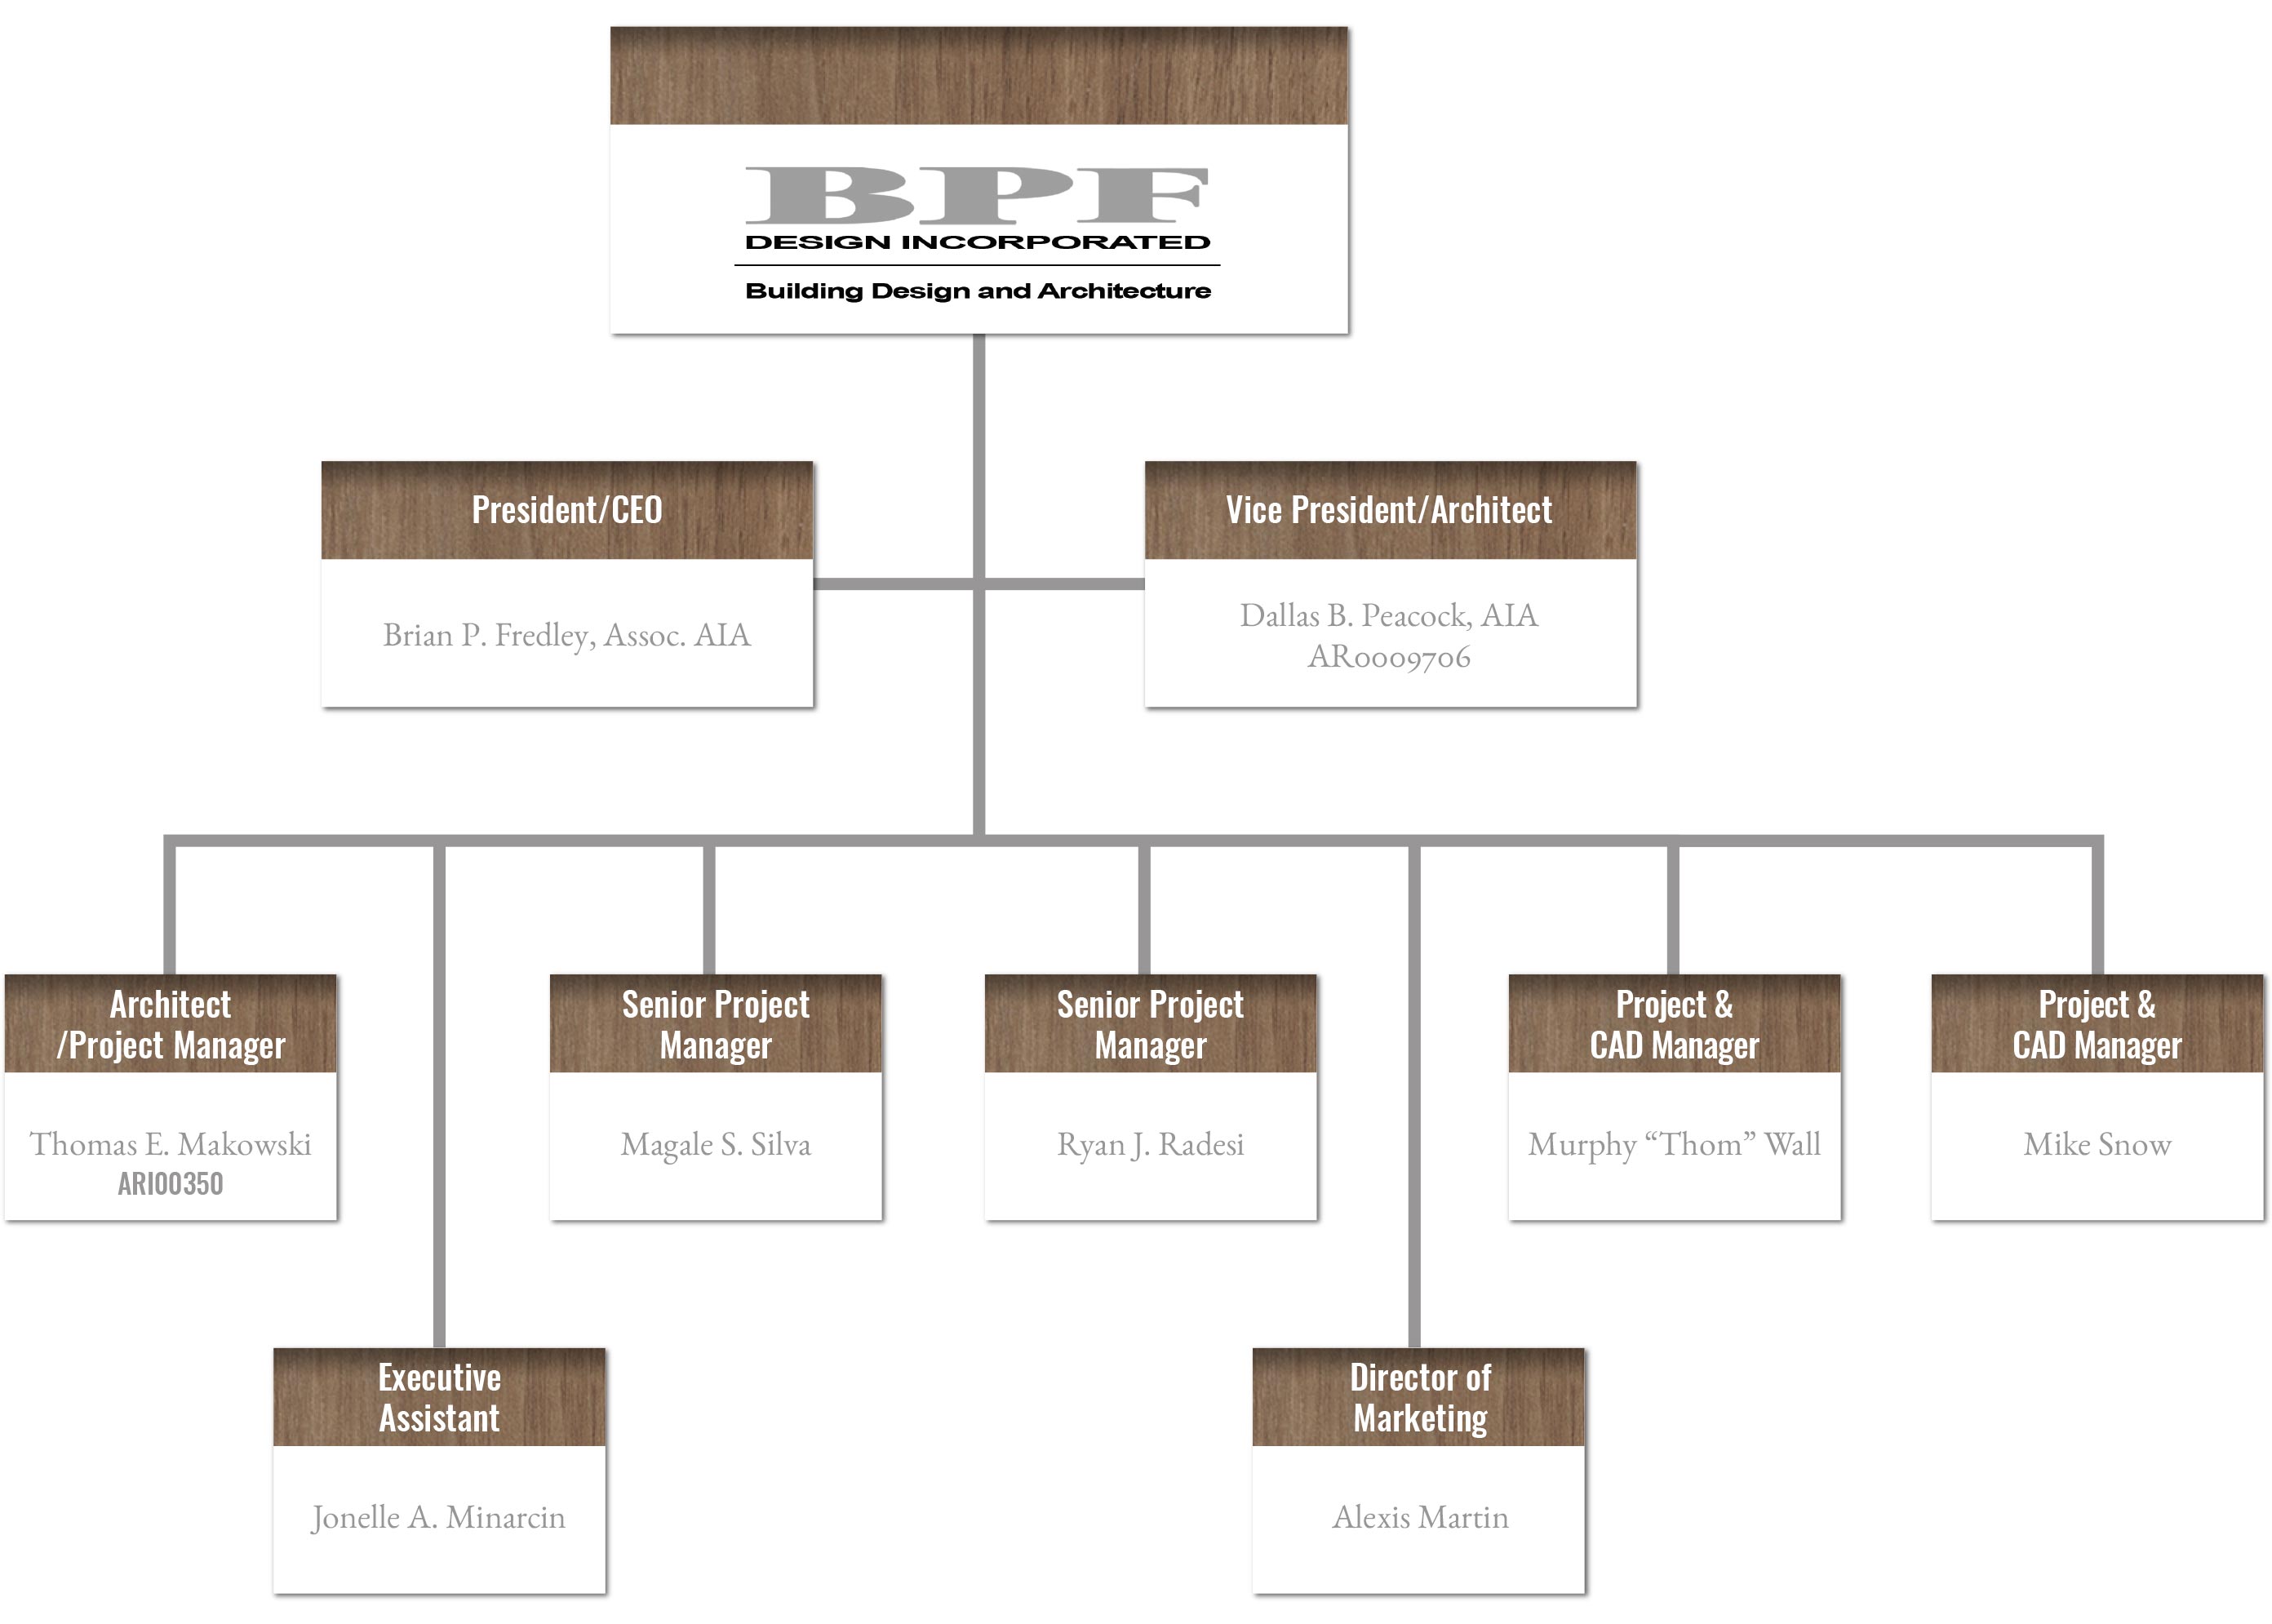 BPF Design, Inc. organizational chart.